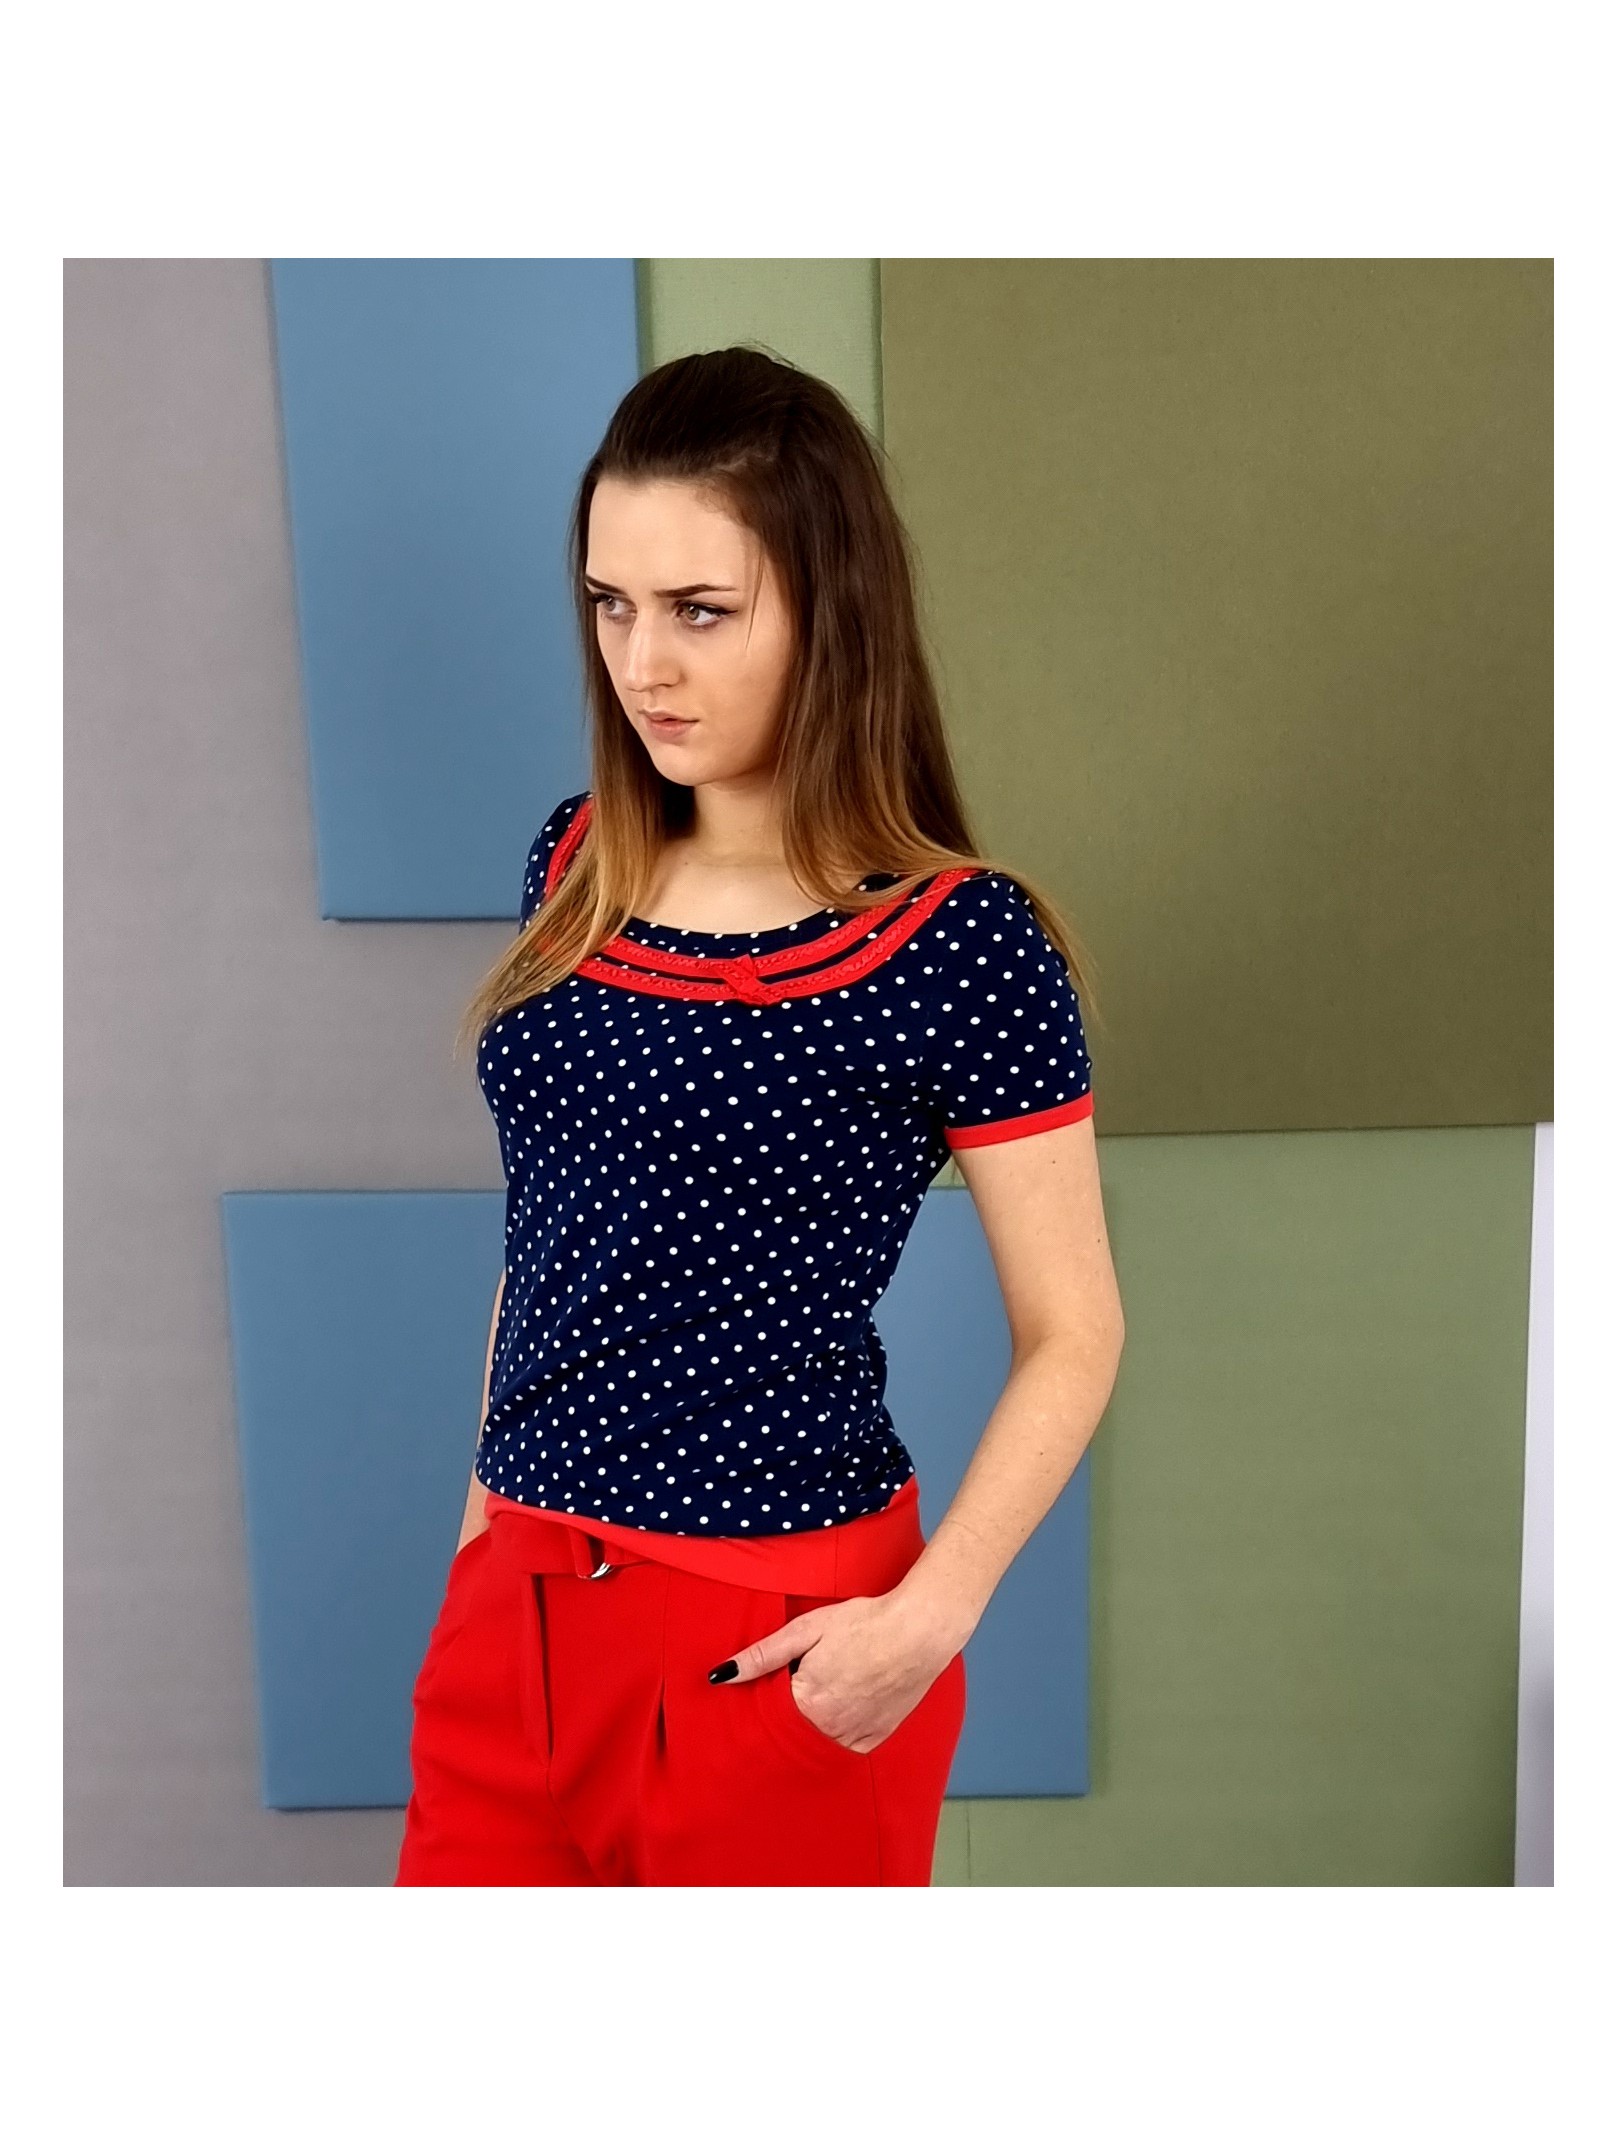 Iza Fabian Design Damen Mode Shirt Punkte Blau Rot